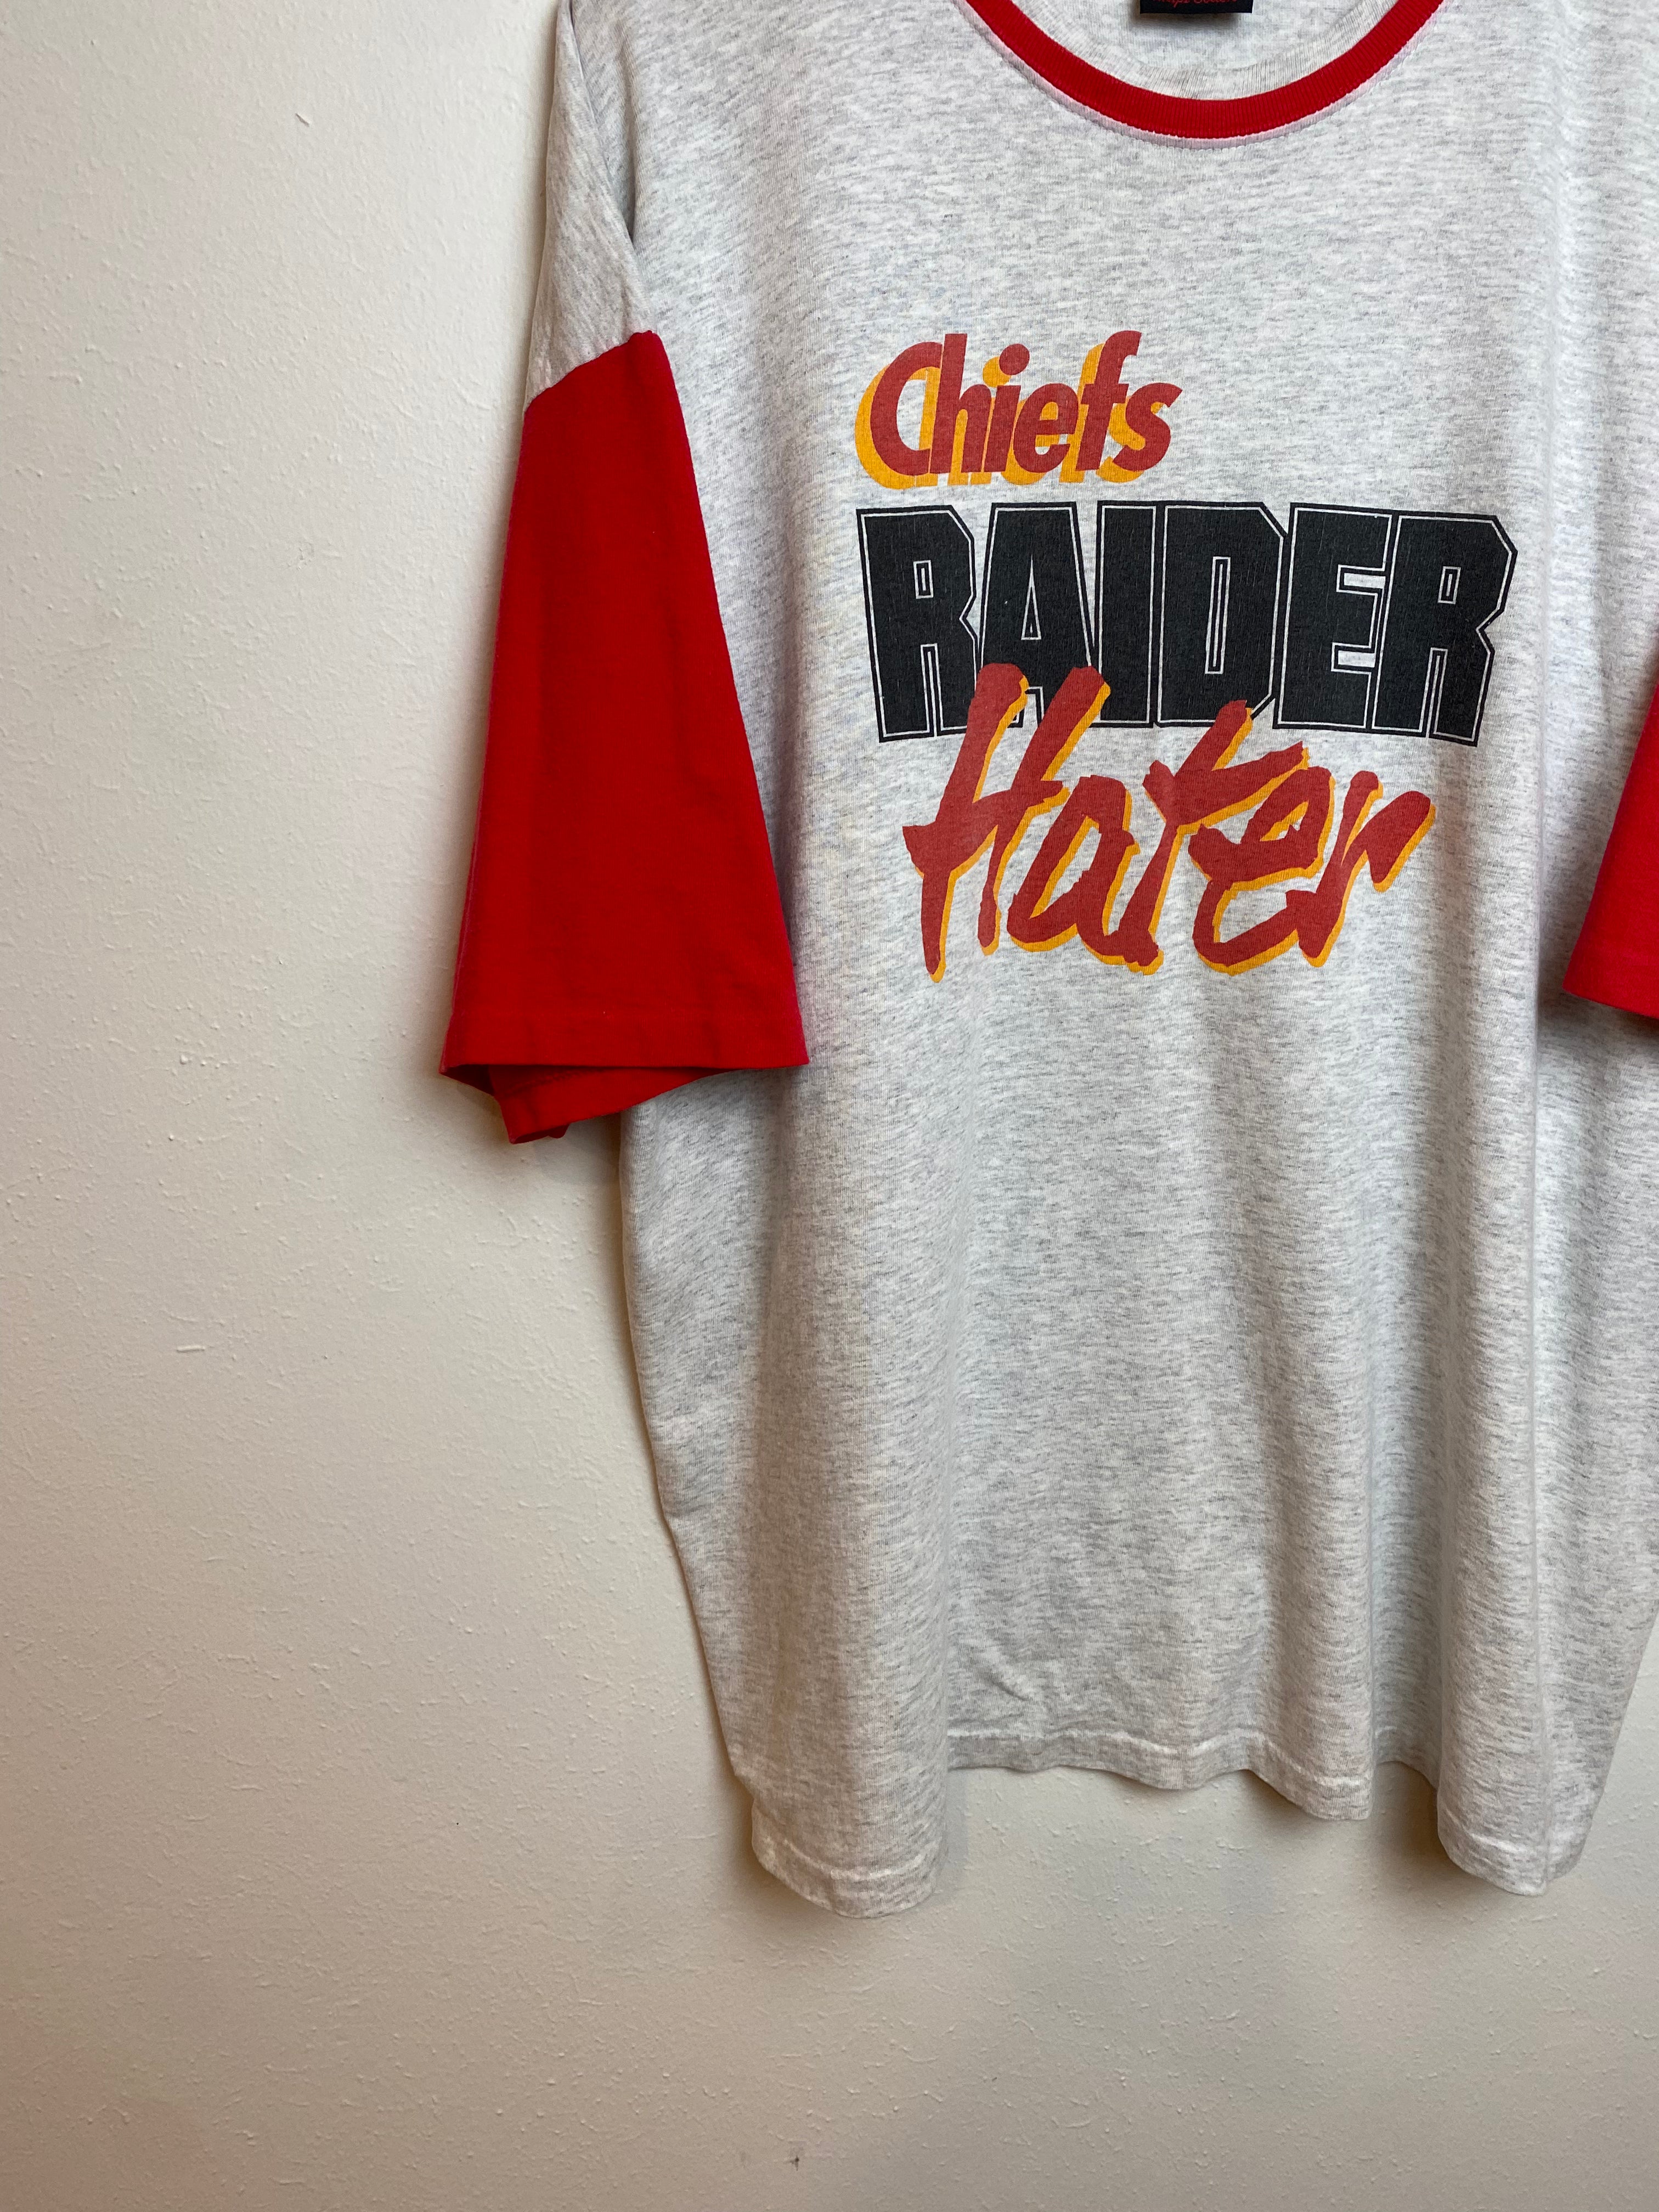 1990s Chiefs Raider Hater T-Shirt (XL)